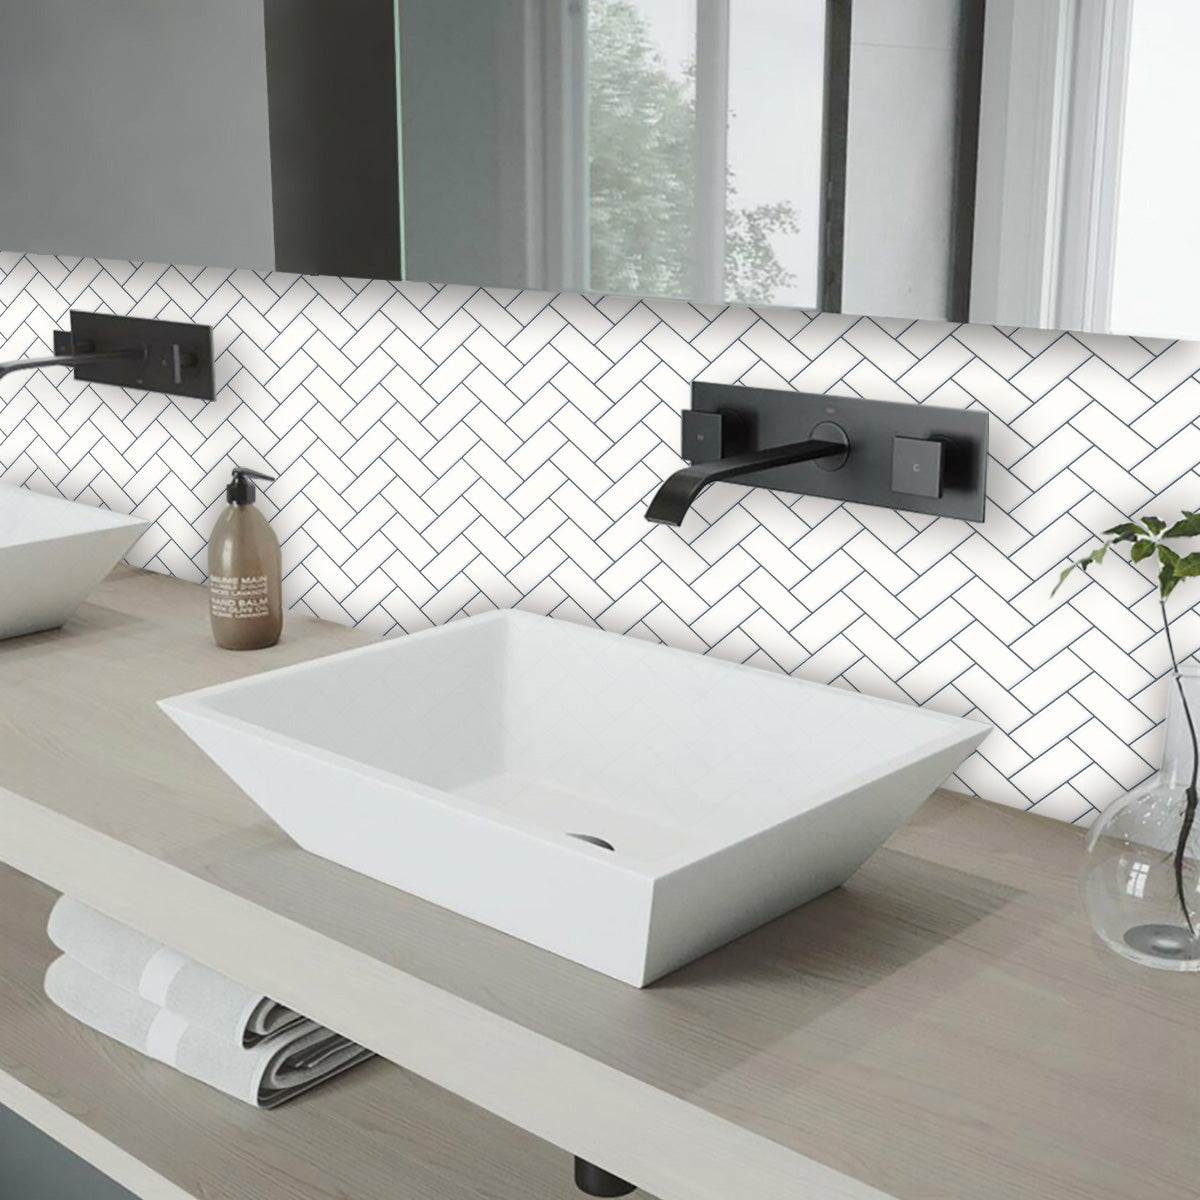 White herringbone tiles above a bathroom vanity